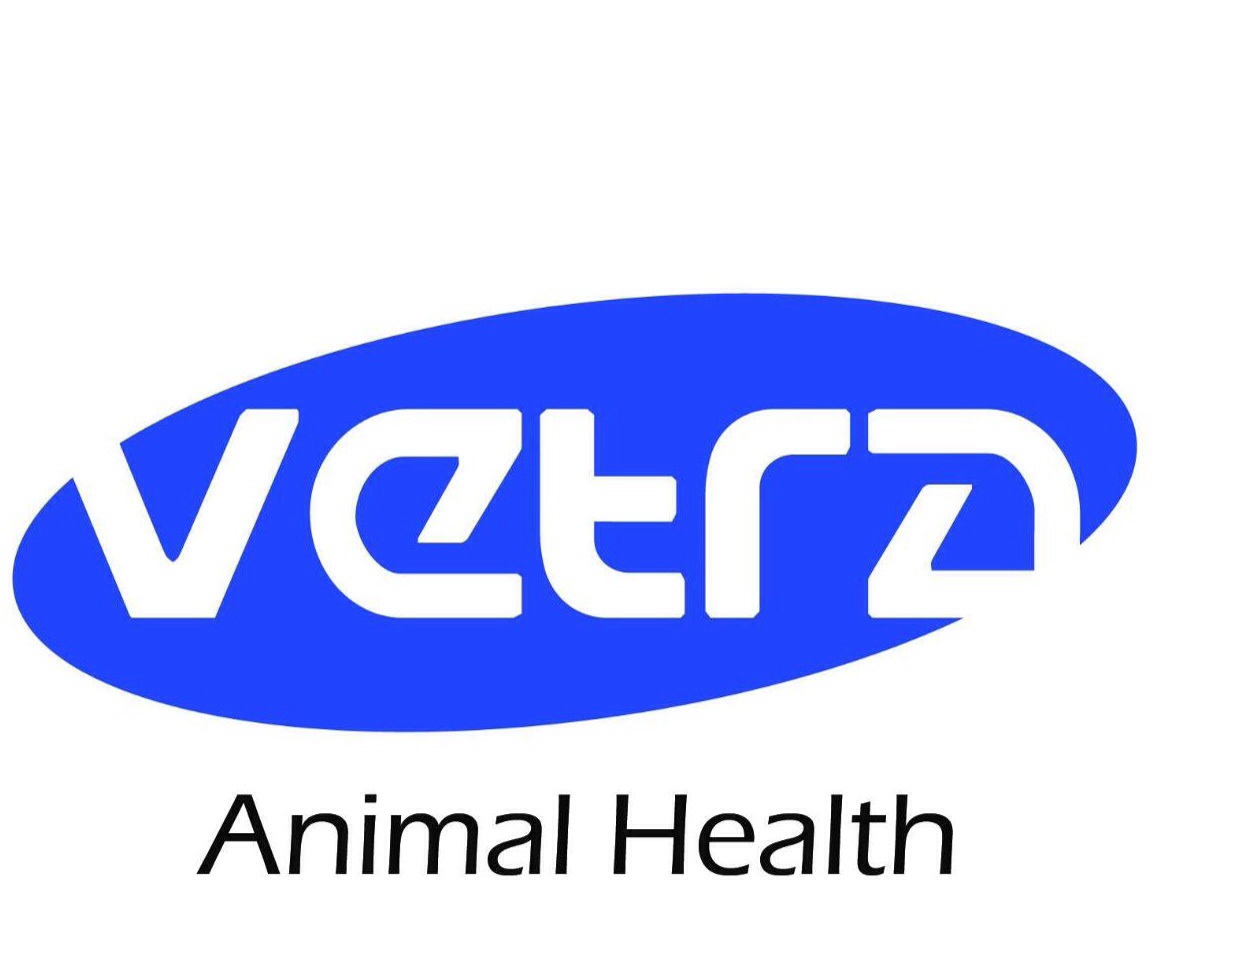 vetra animal health